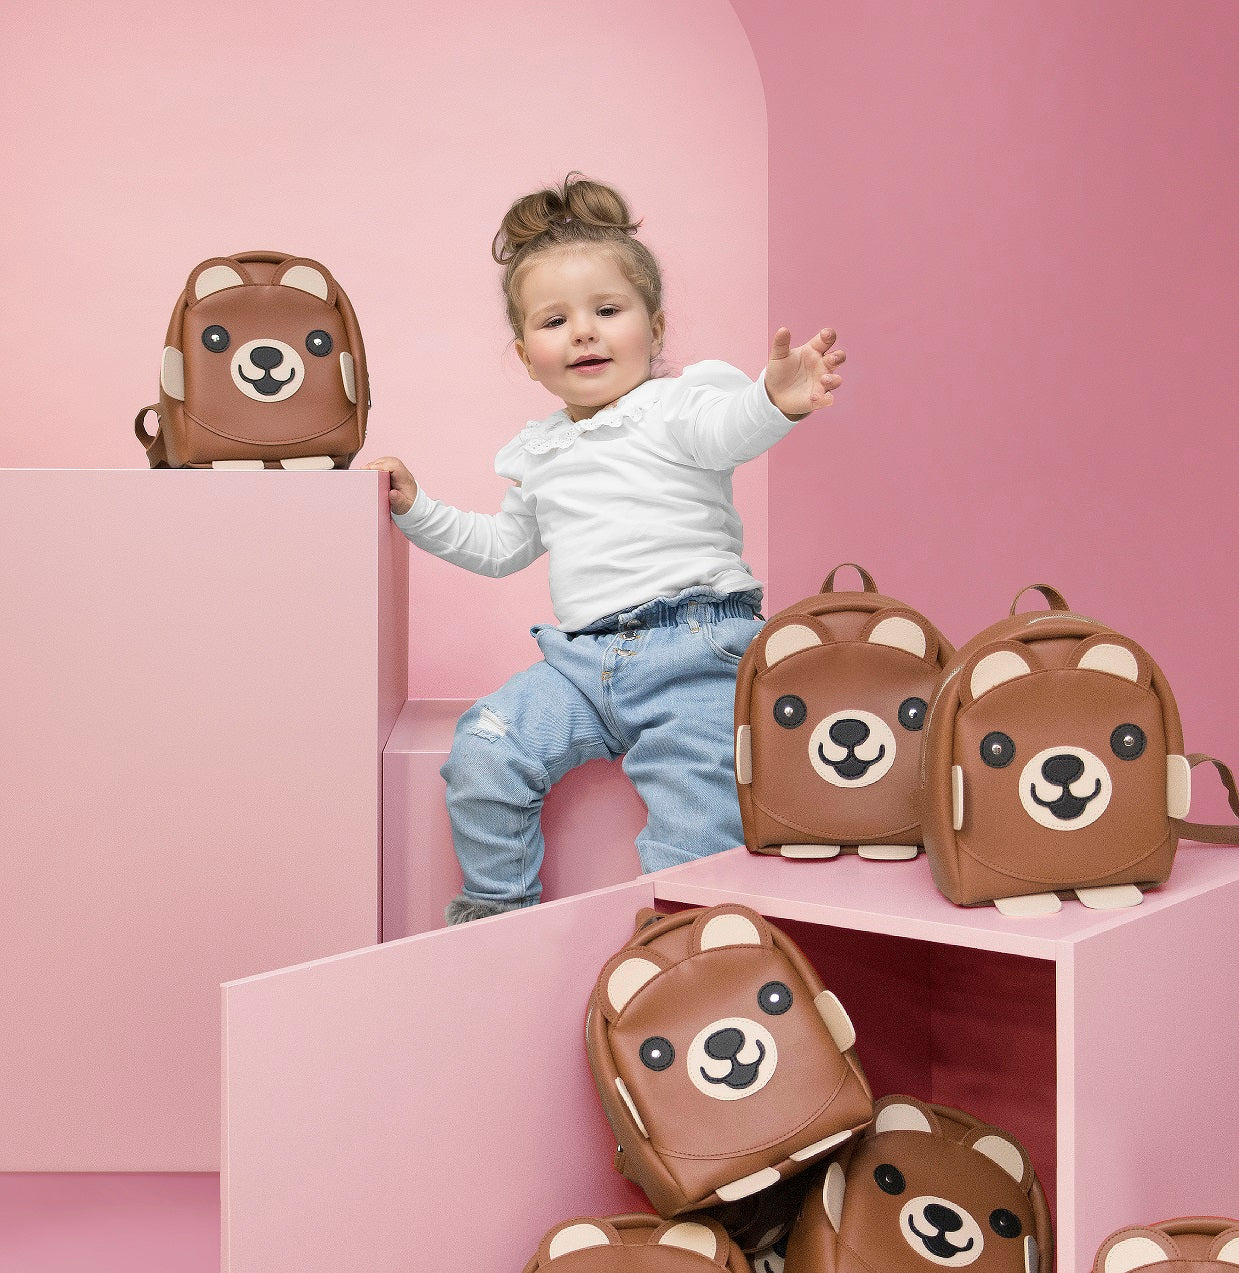 Child bag - BAG - MY FIRST BAG - BEAR